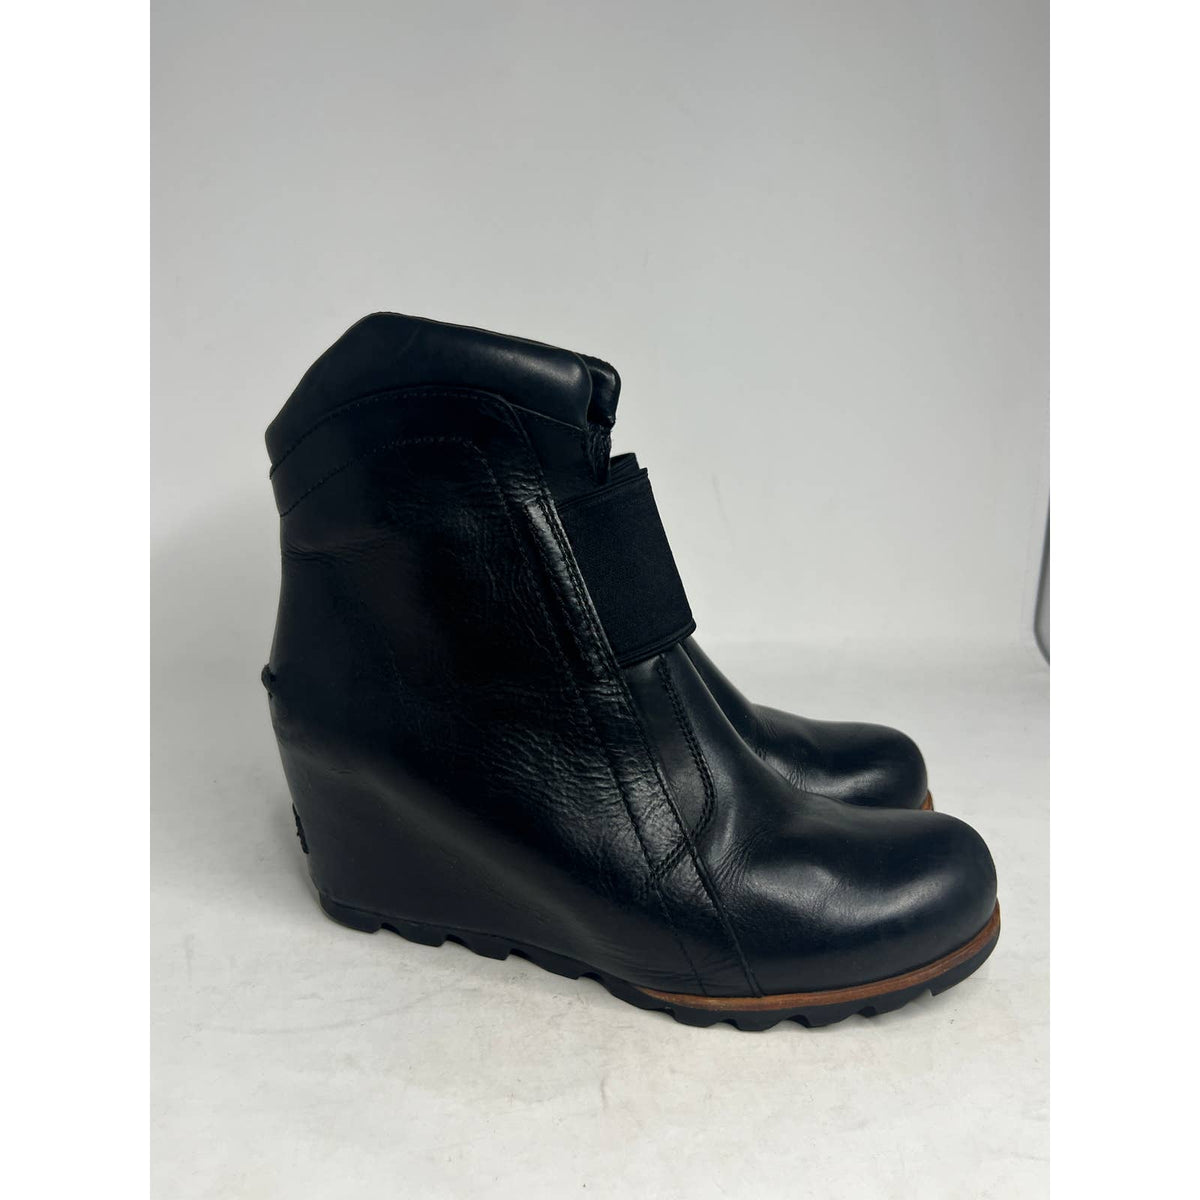 Sorel Fiona Black Wedge Boots Sz.9